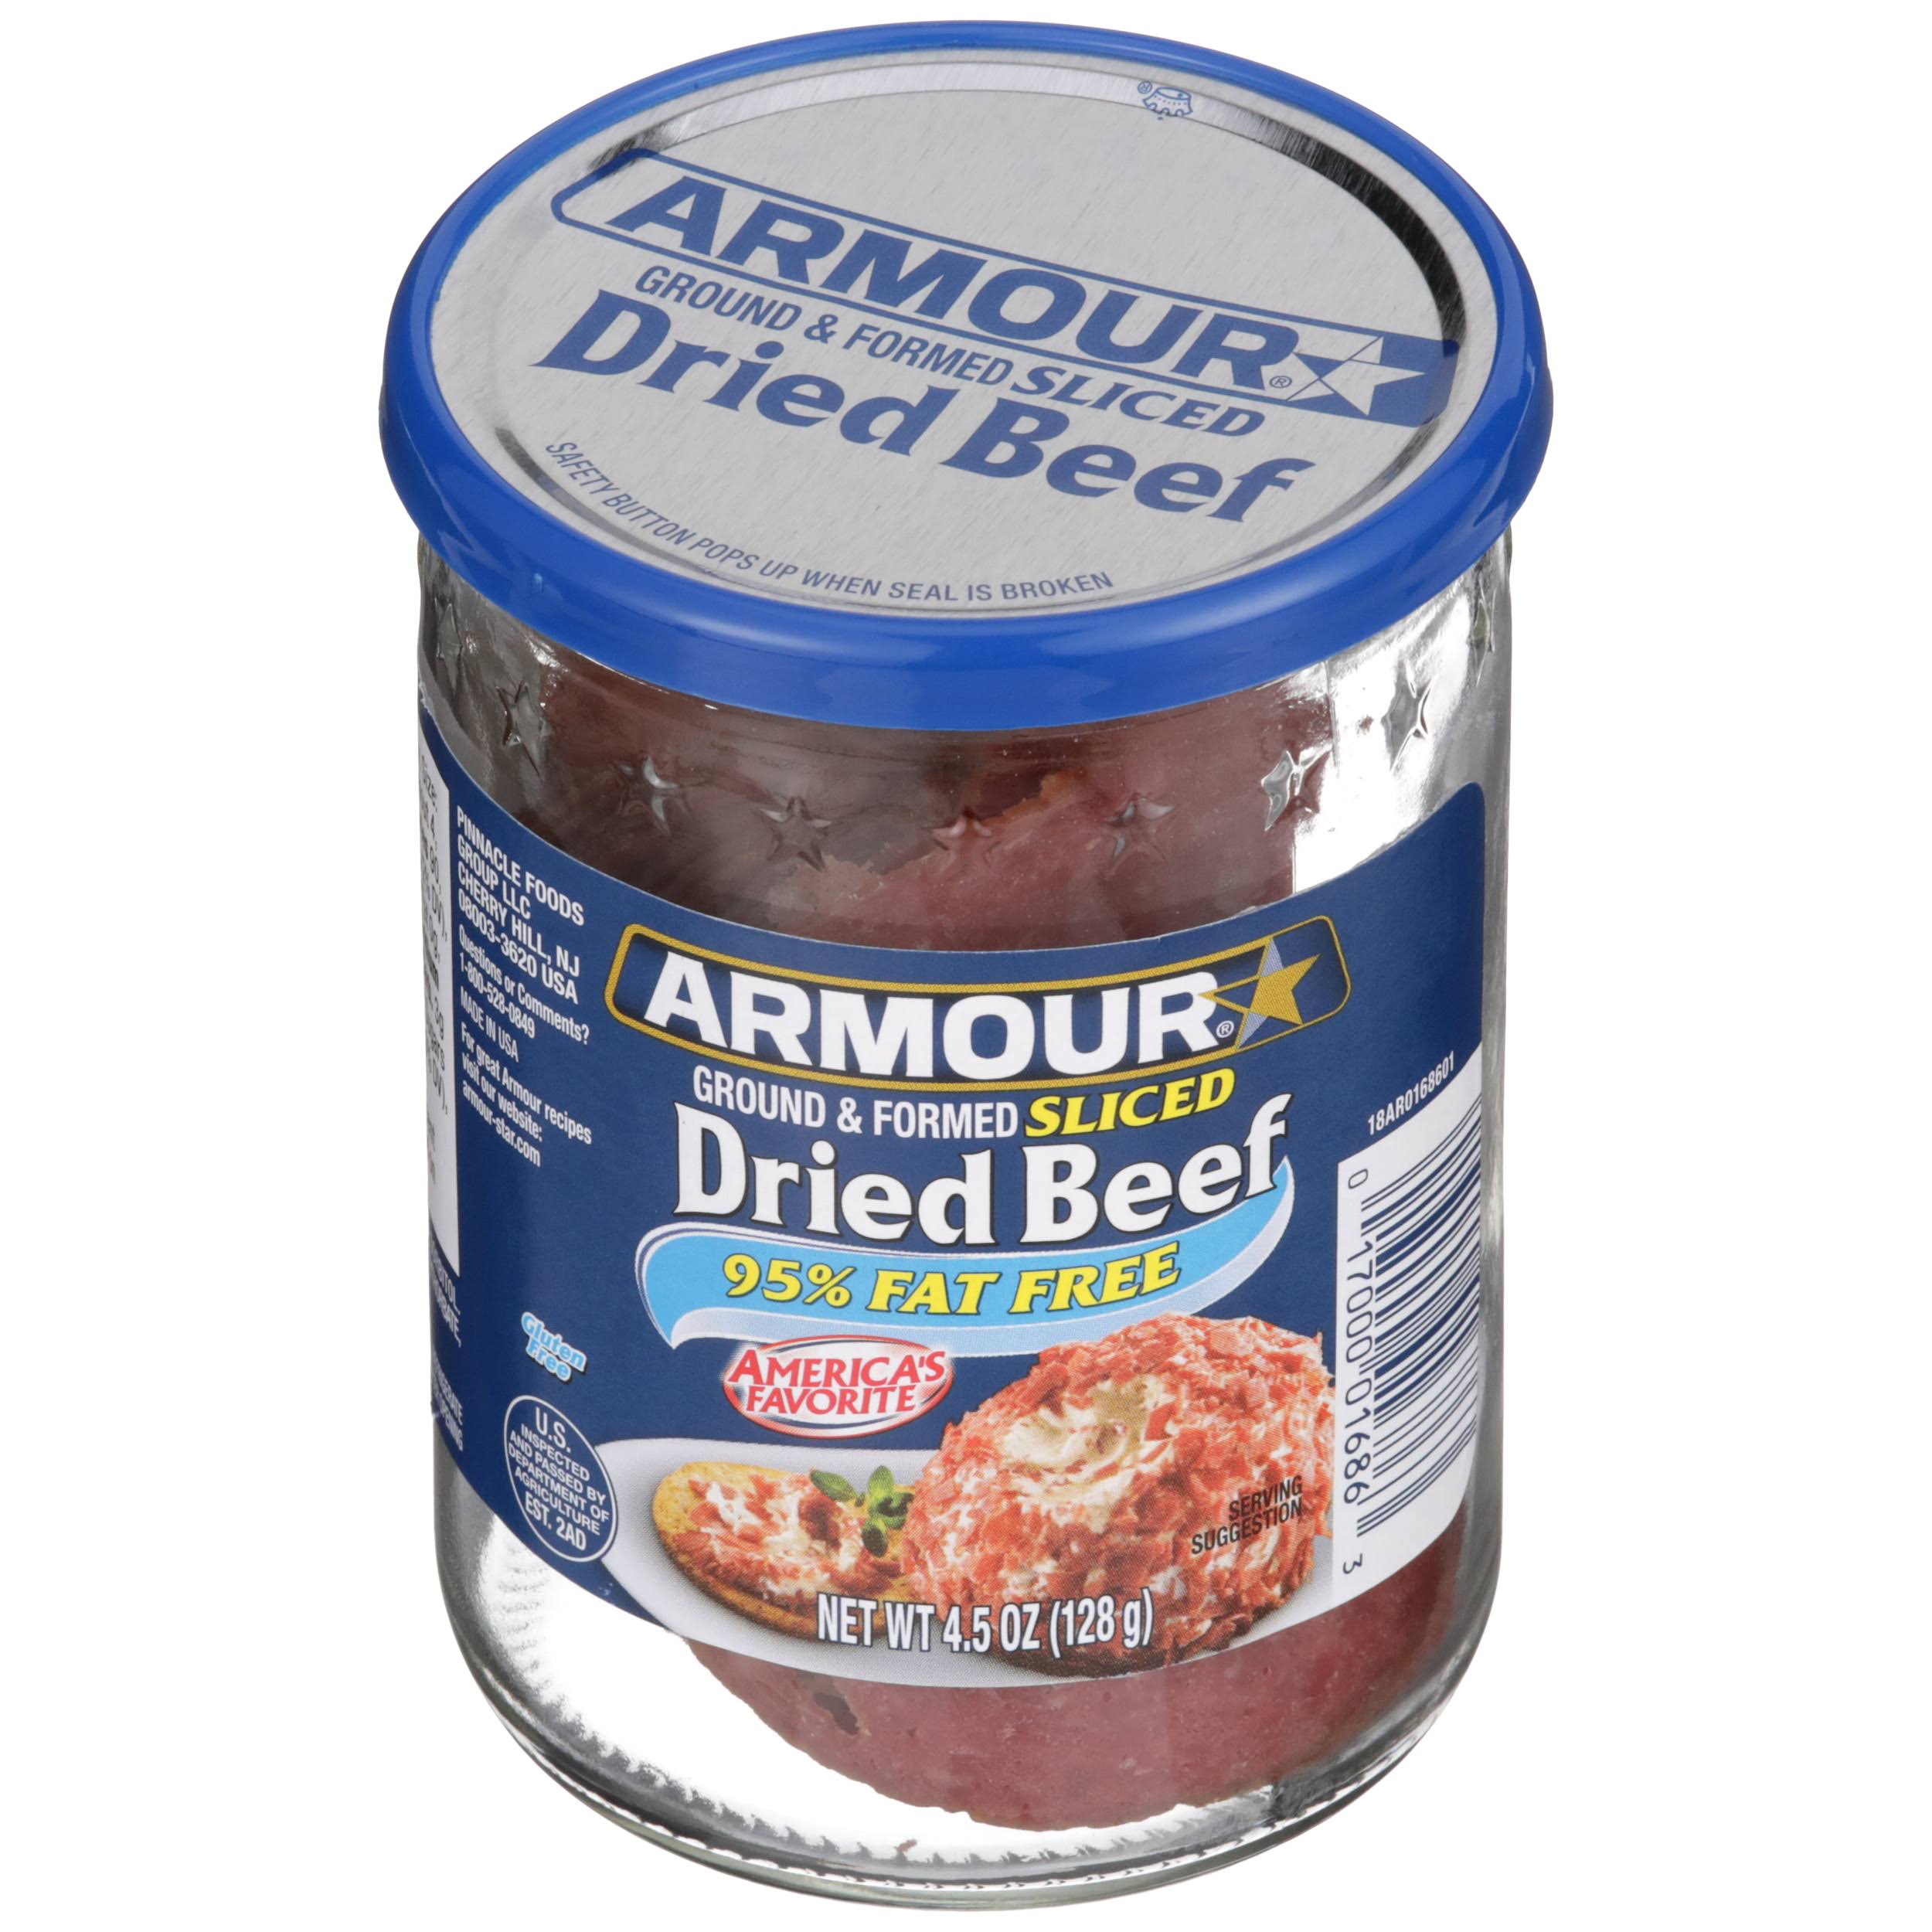 Armour Sliced Dried Beef in Jar - 4.5oz